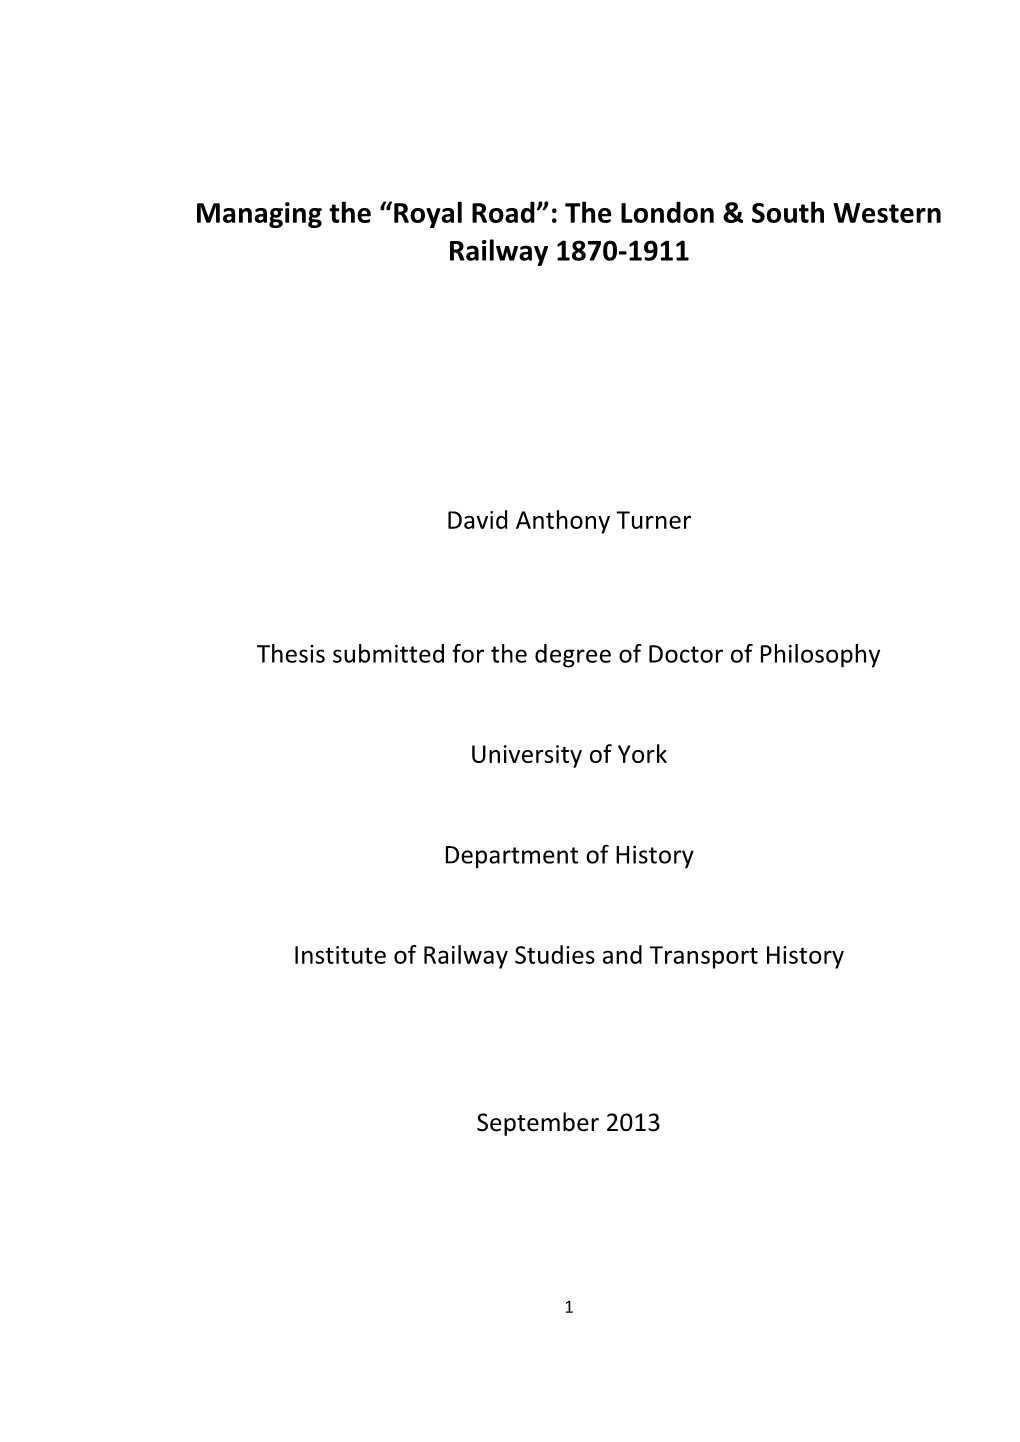 The London & South Western Railway 1870-1911